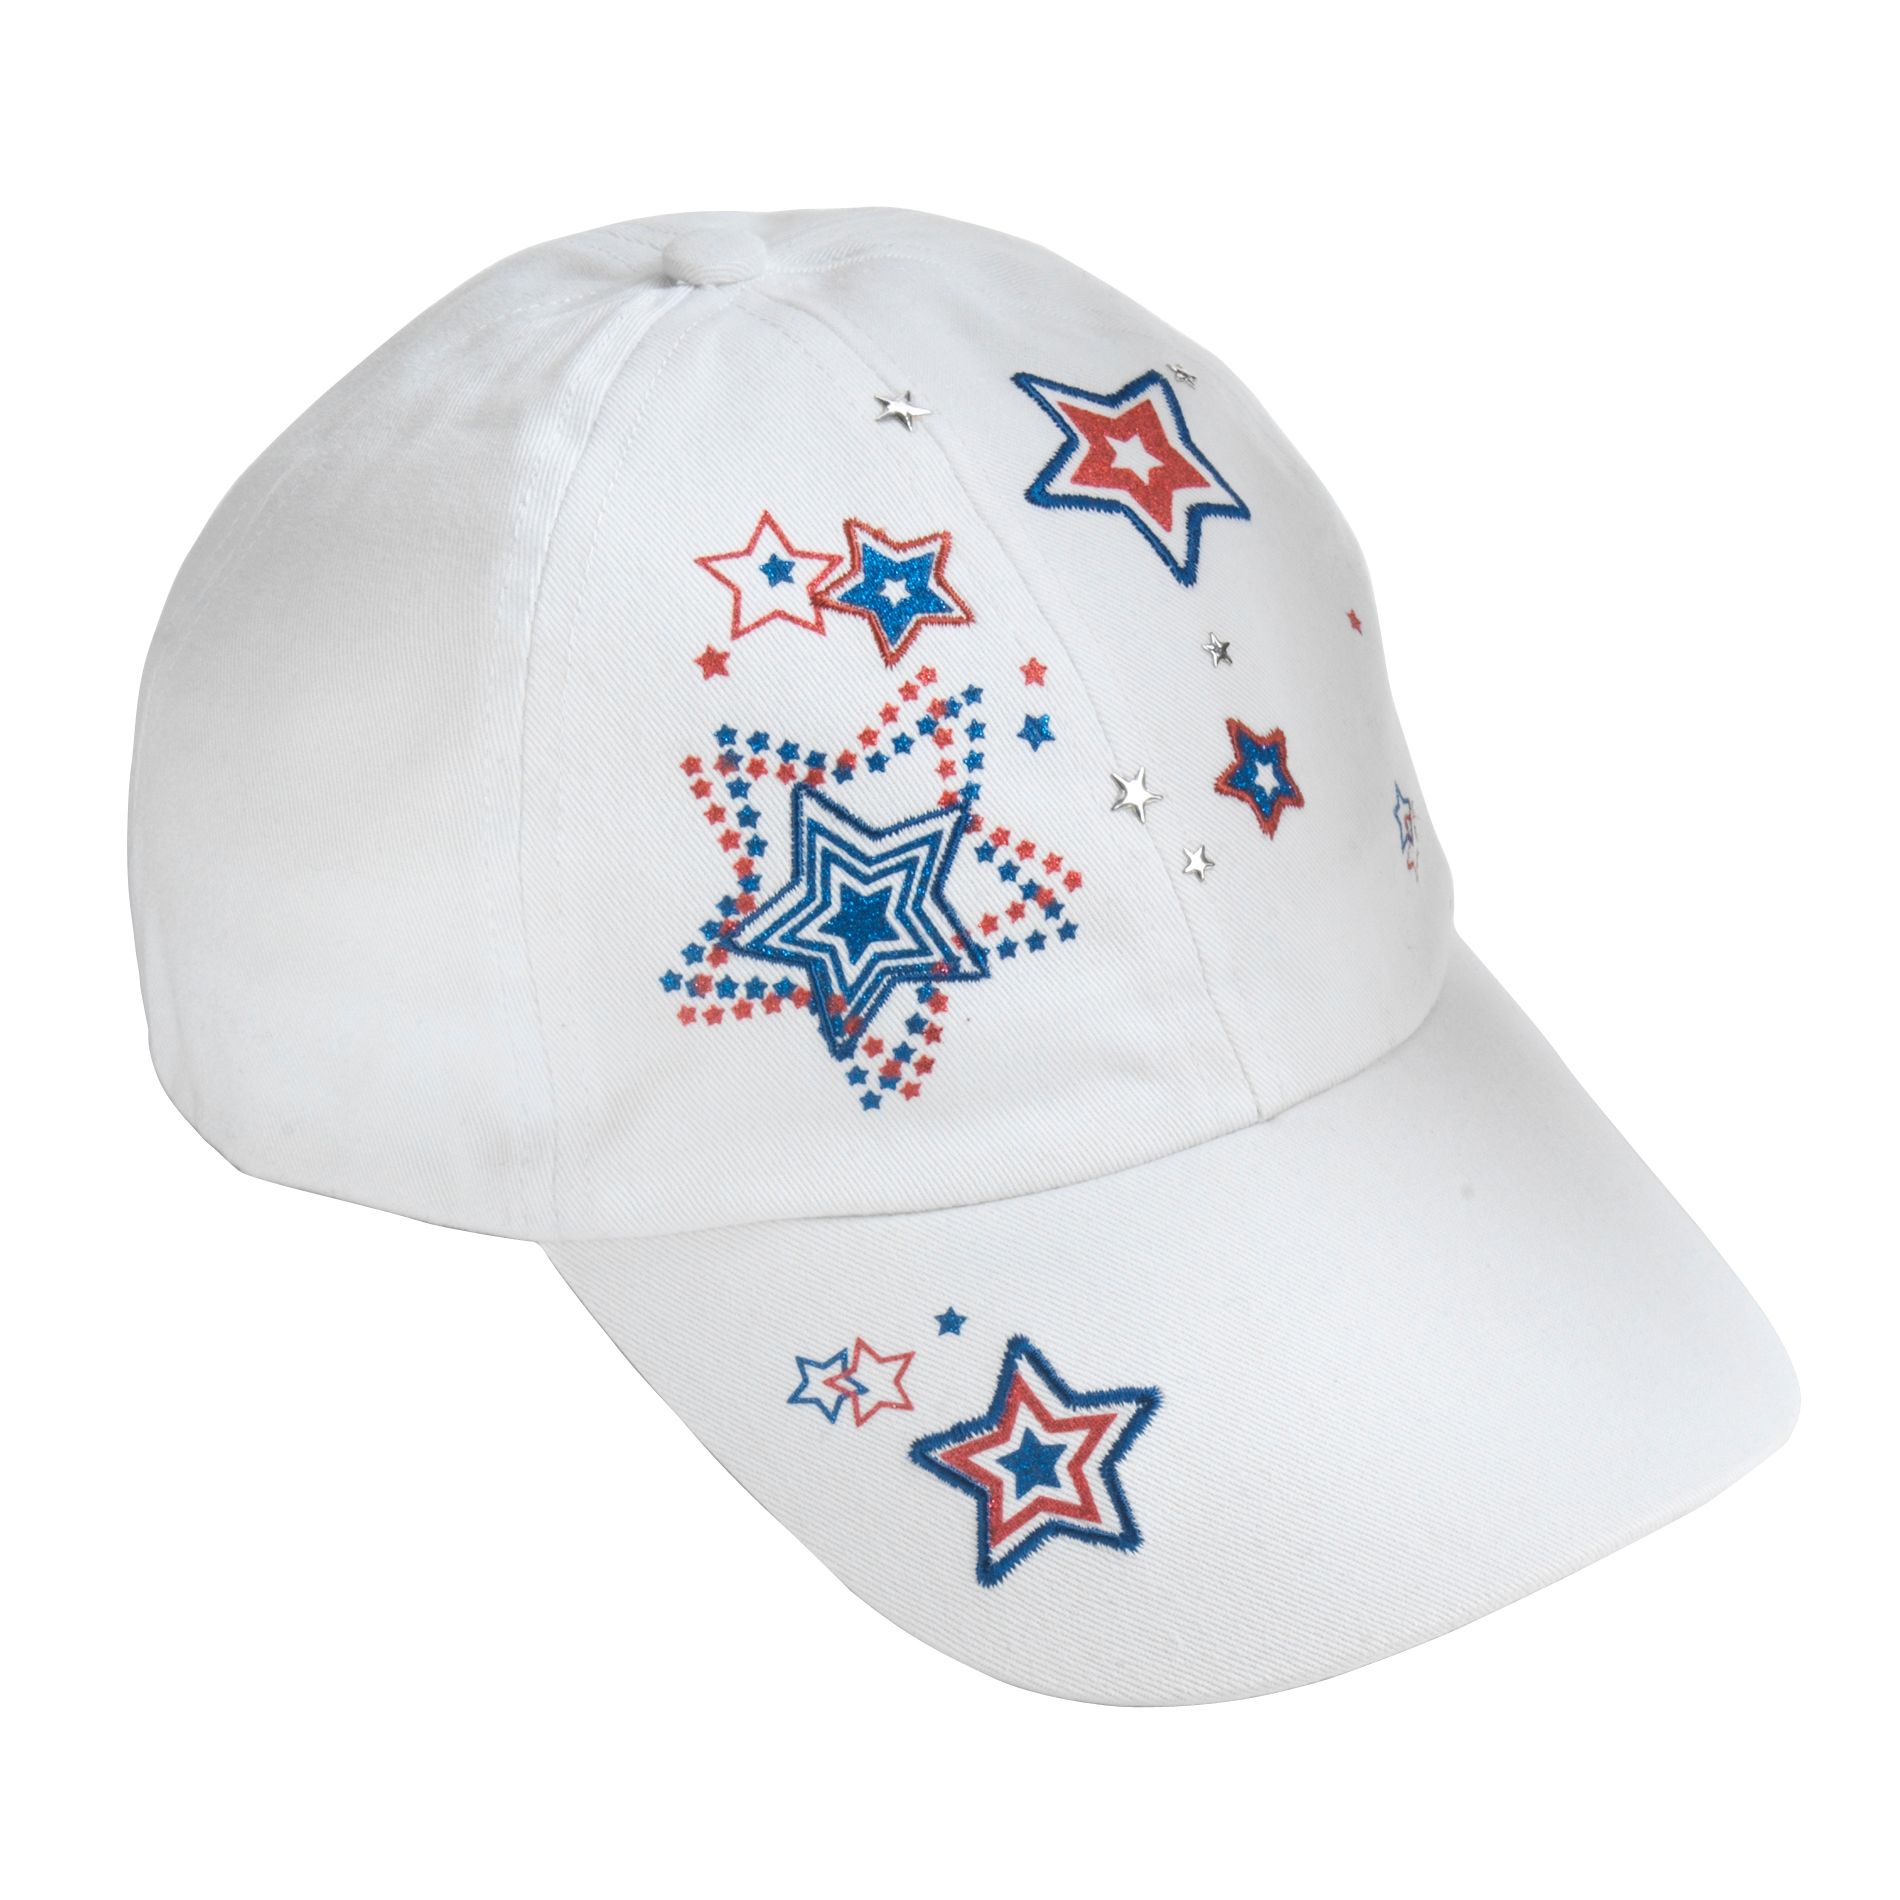 Accessories Americana Studd Baseball Cap with Multiple Stars